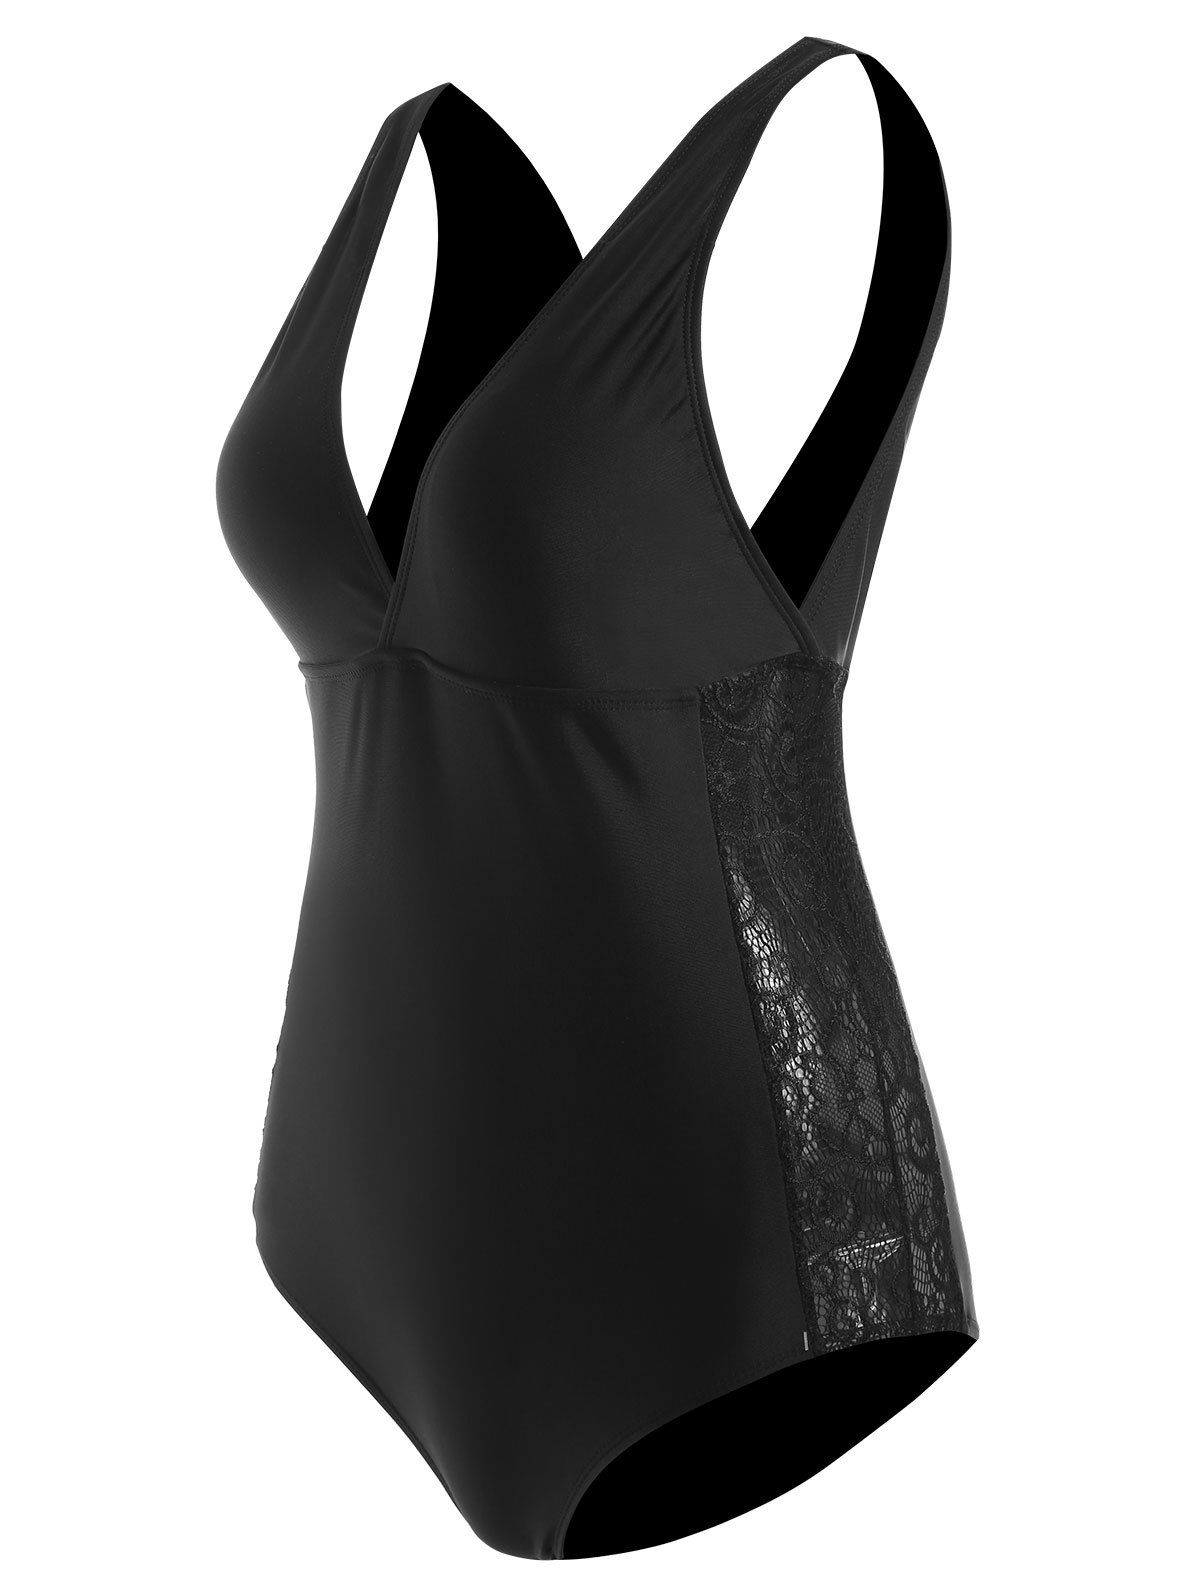 Lace Insert Plunge One-piece Swimsuit - BLACK S